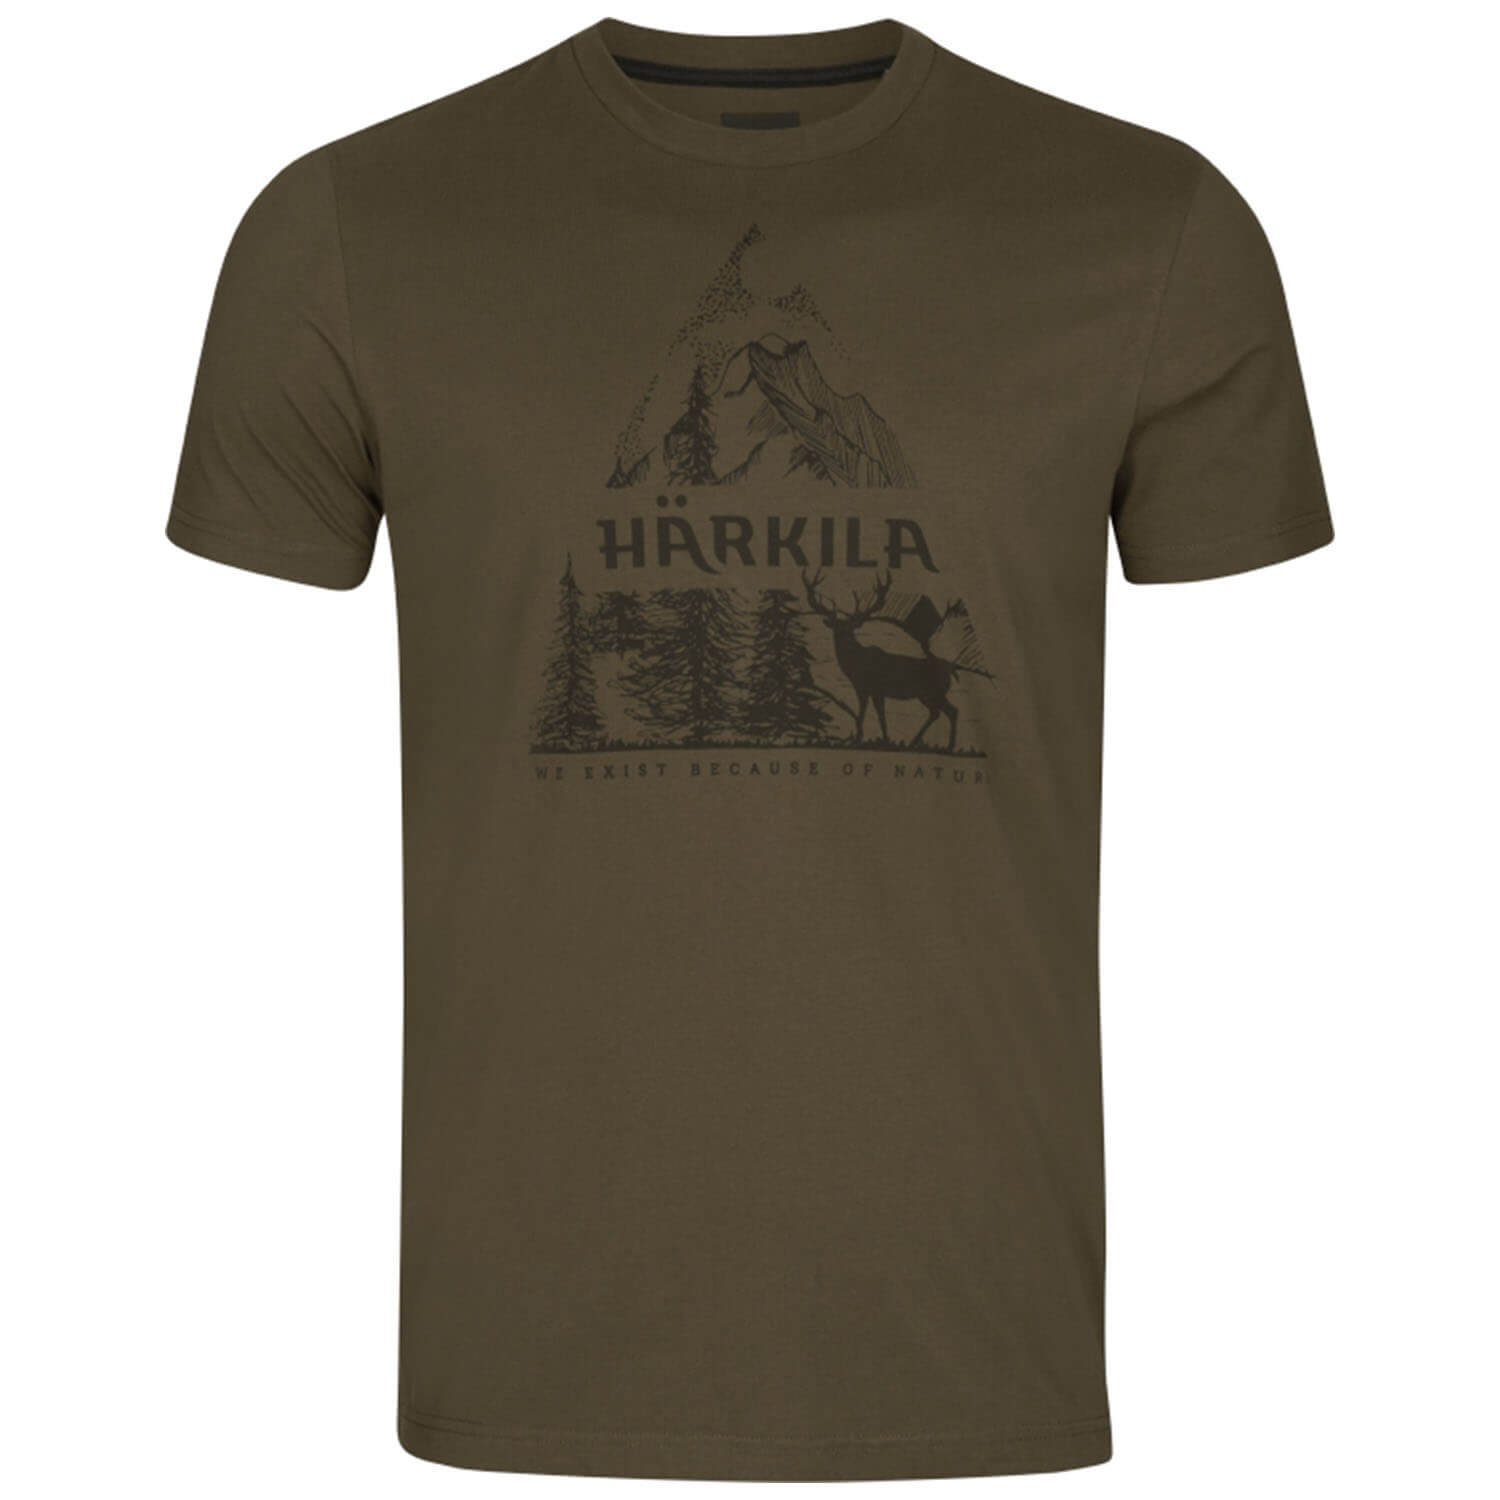  Härkila Natuur T-shirt (Wilgengroen) - Jachtshirts